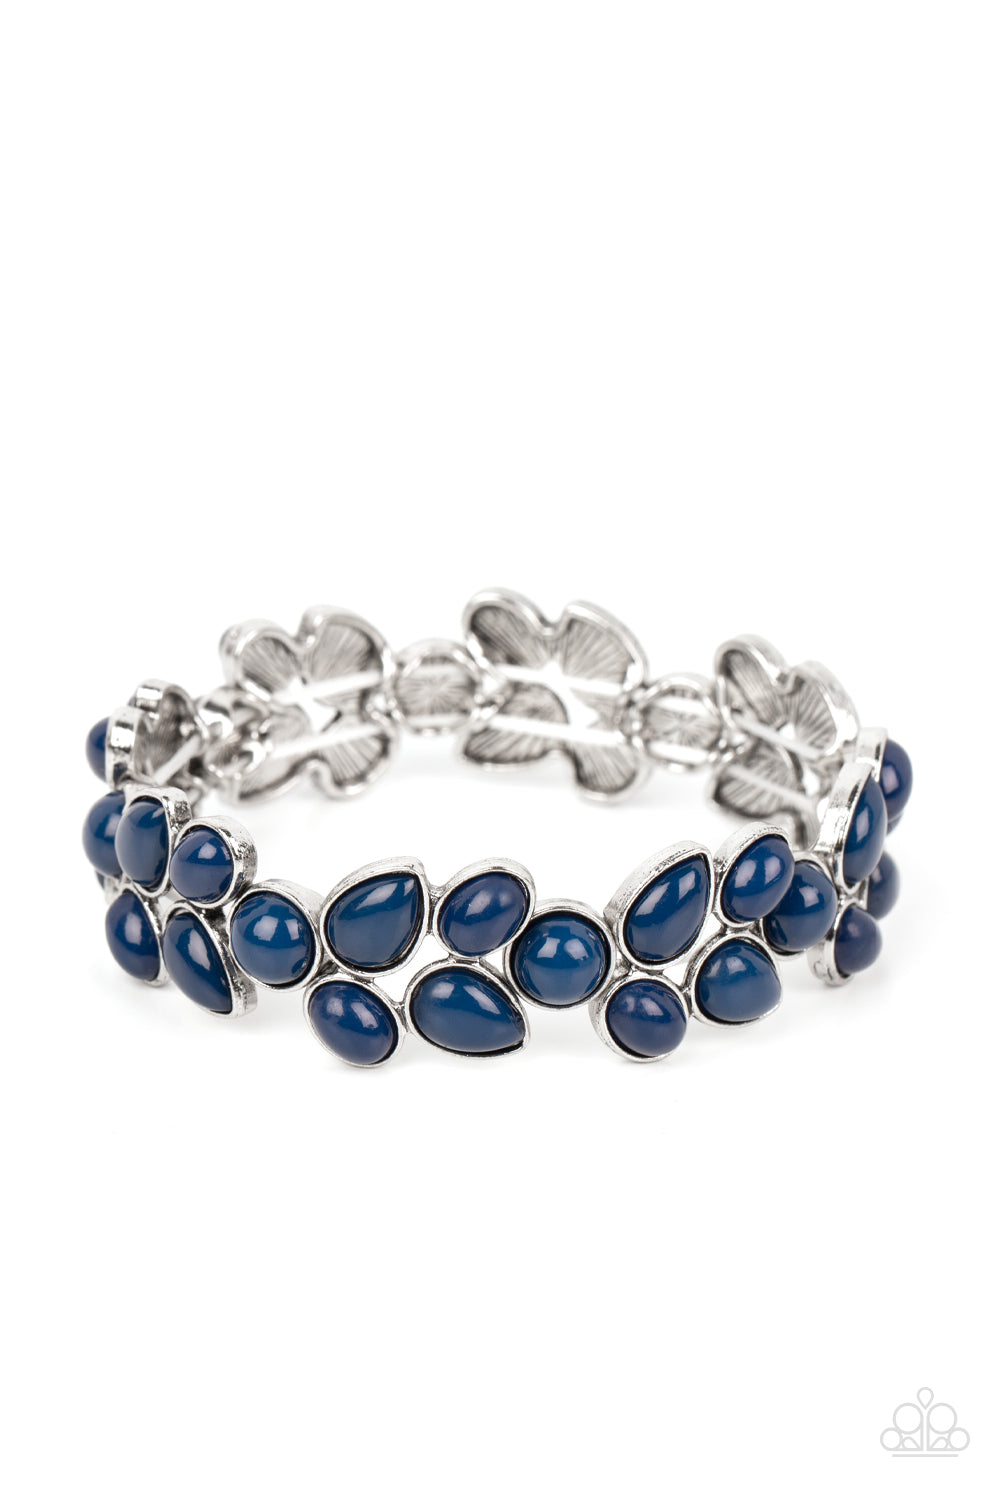 Marina Romance - Blue Bracelets - Paparazzi Accessories - Paparazzi Accessories 